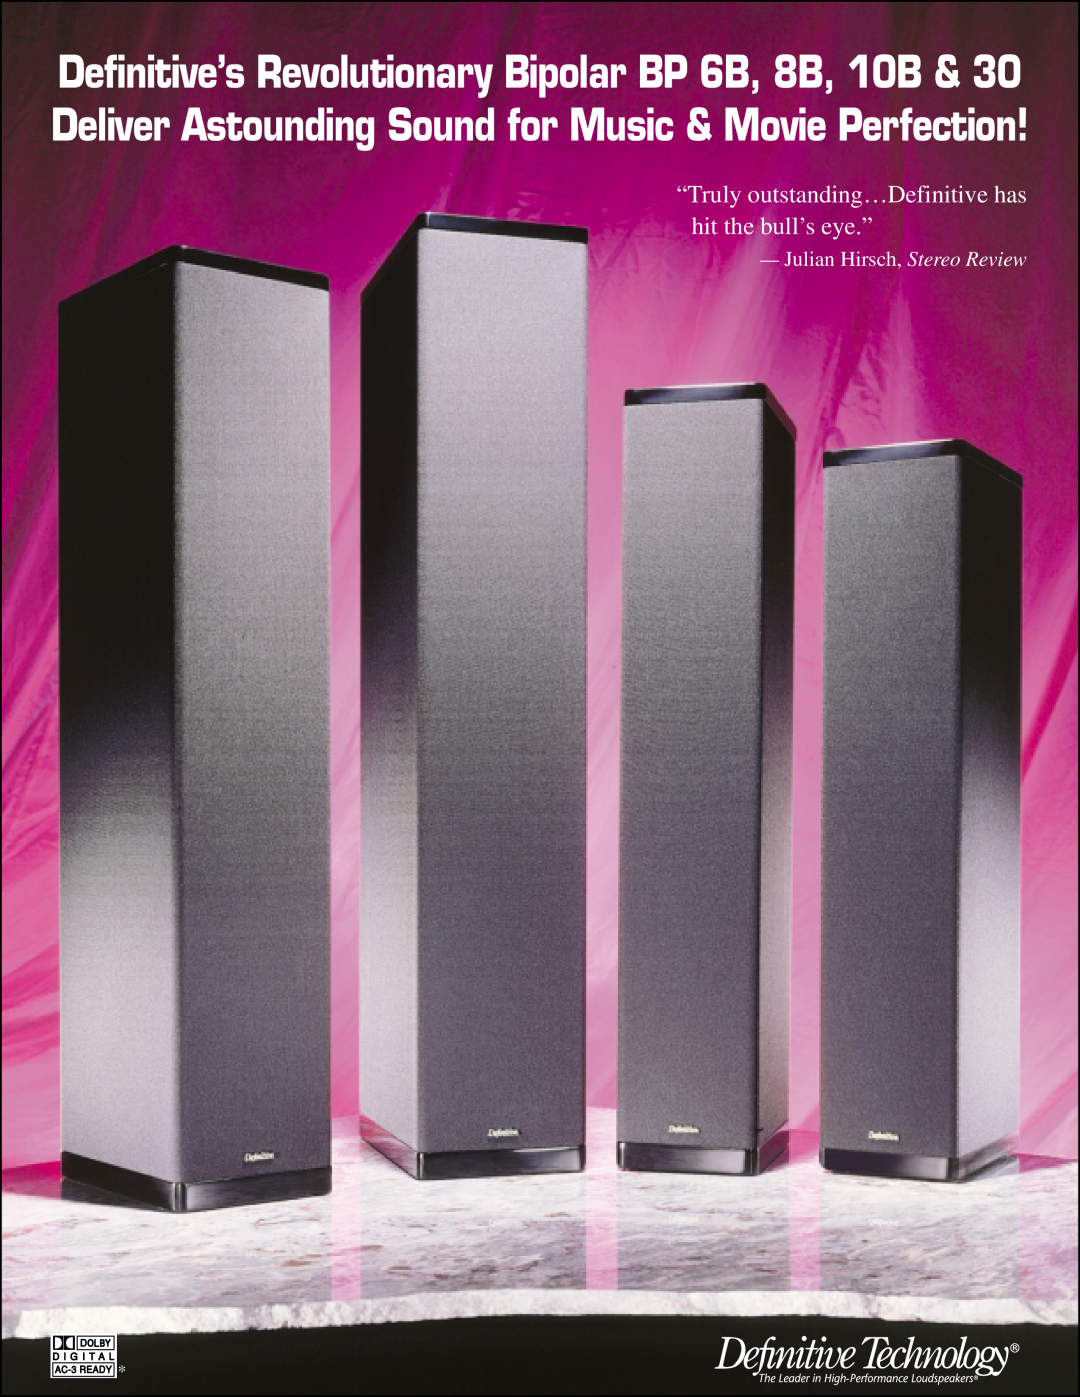 Definitive Technology 30, BP 6B, 8B, 10B manual Julian Hirsch, Stereo Review 